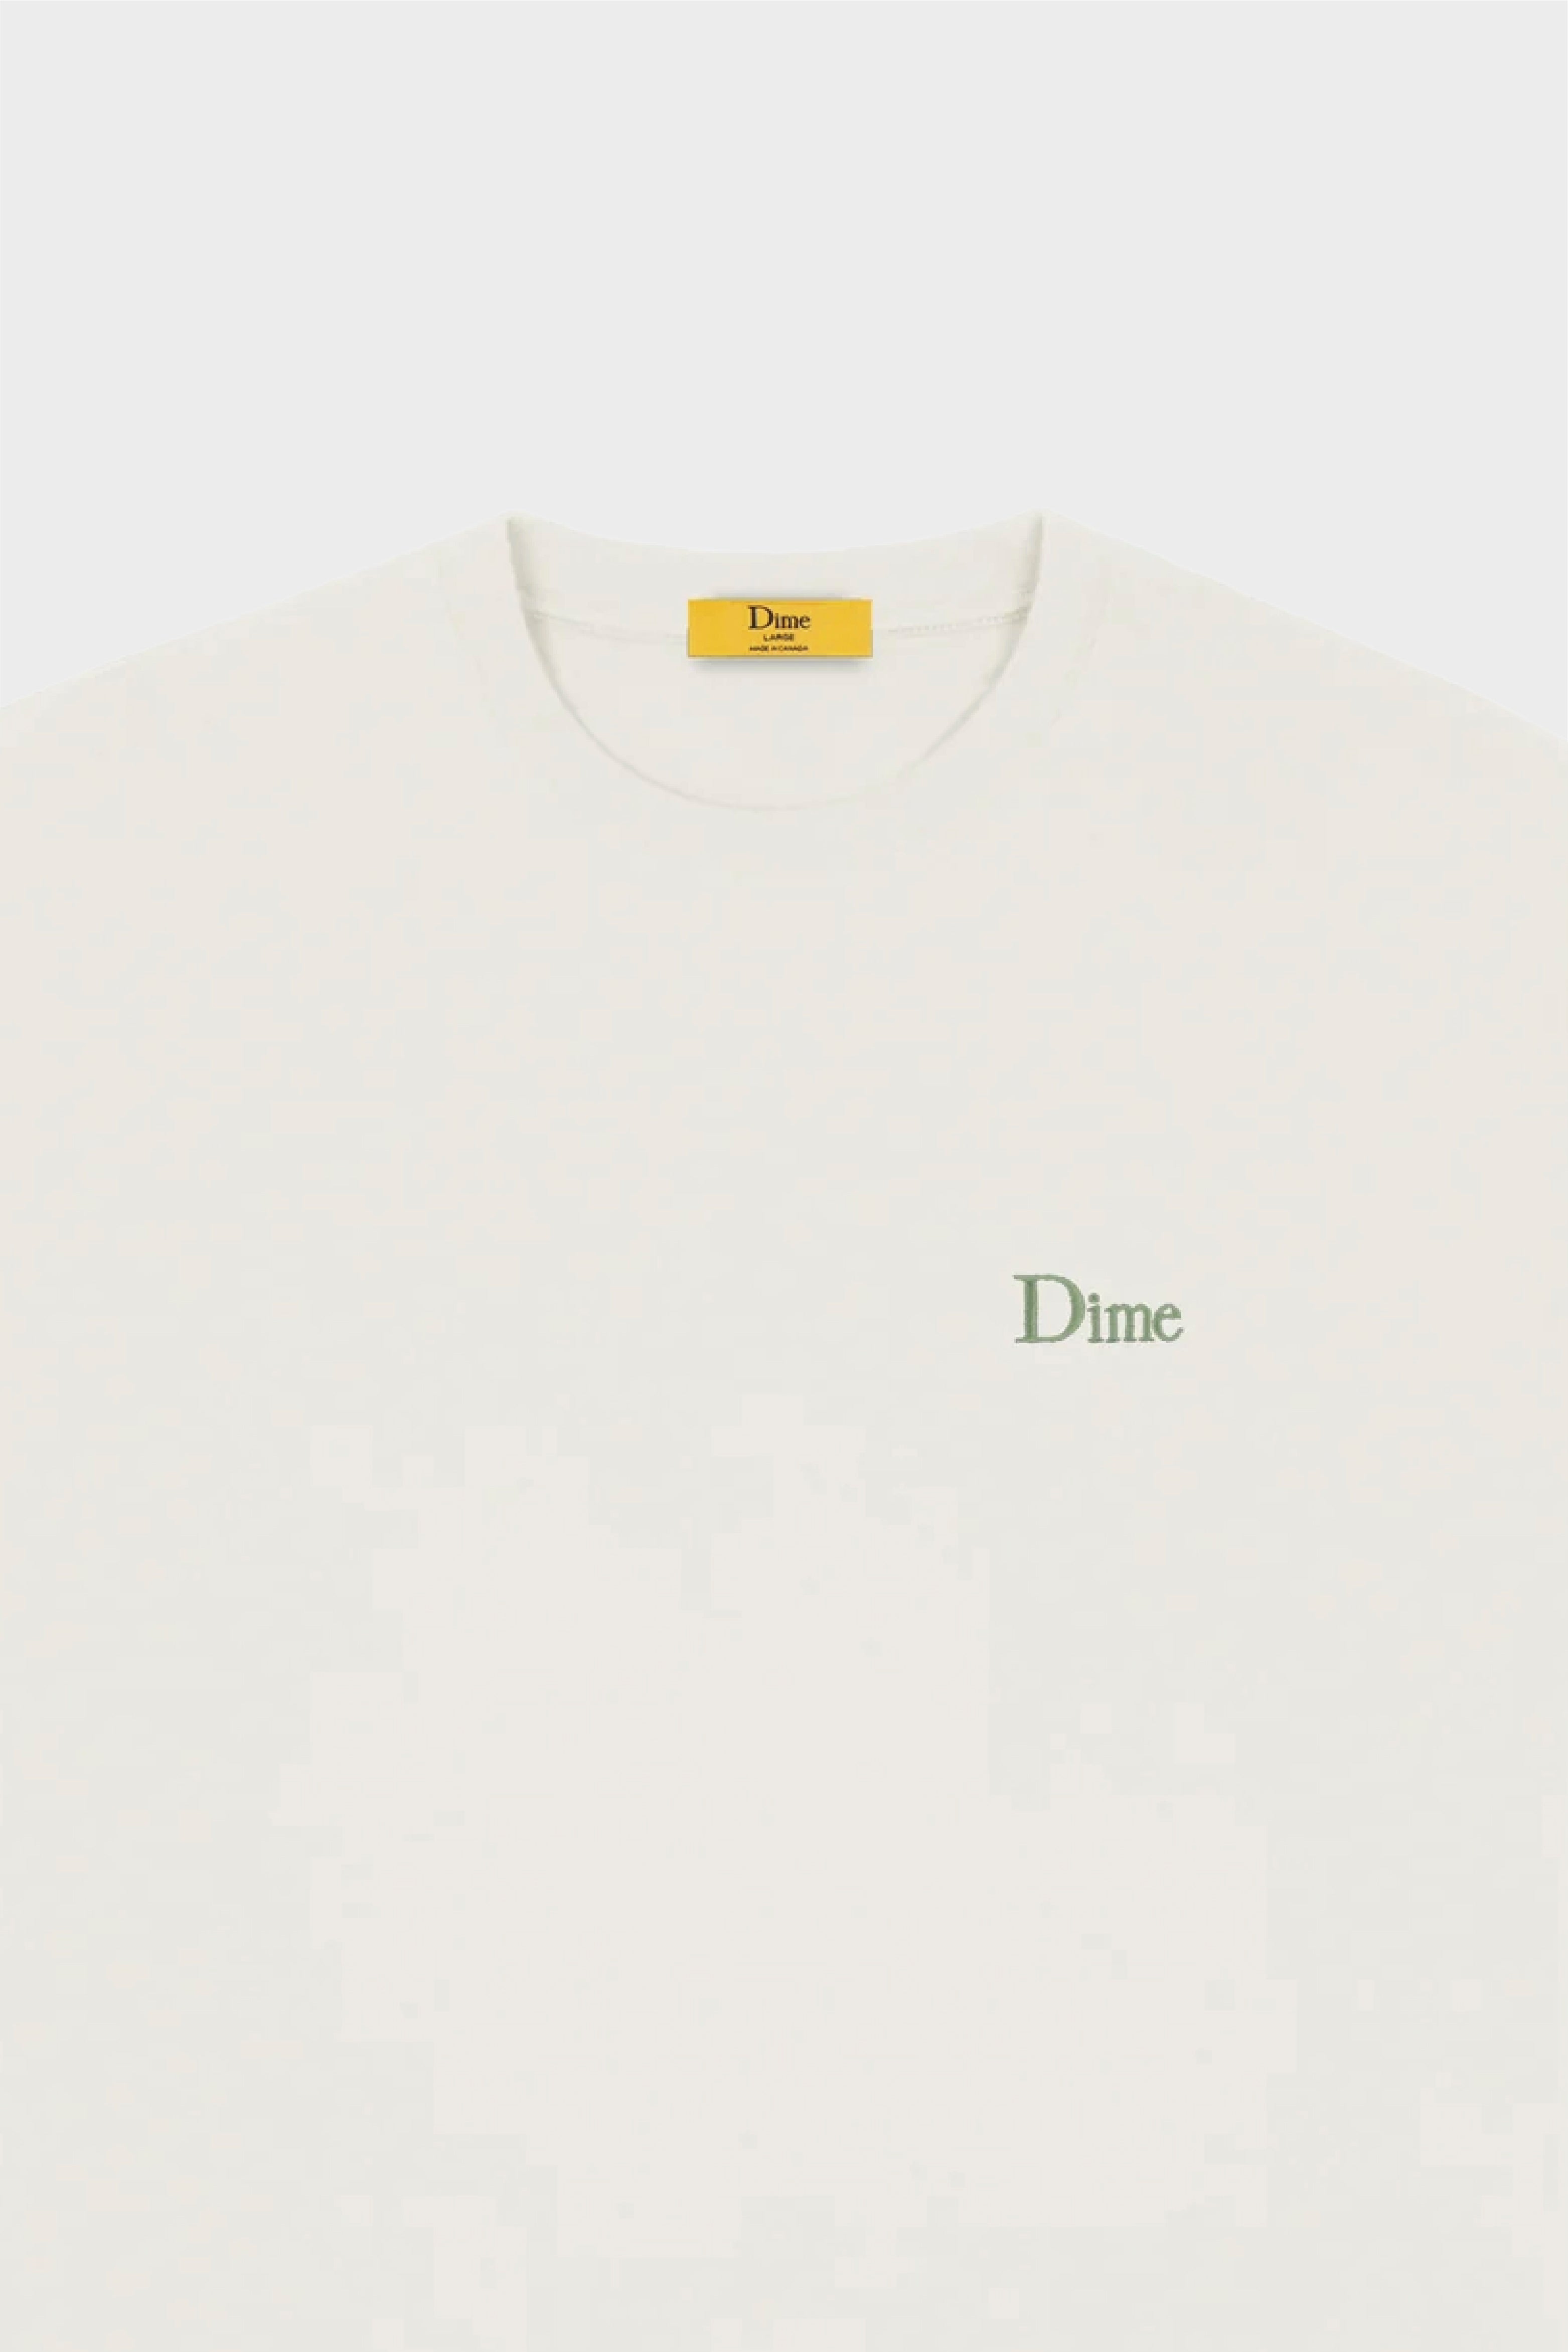 Selectshop FRAME - DIME Dime Classic Small Logo T-Shirt T-Shirts Concept Store Dubai